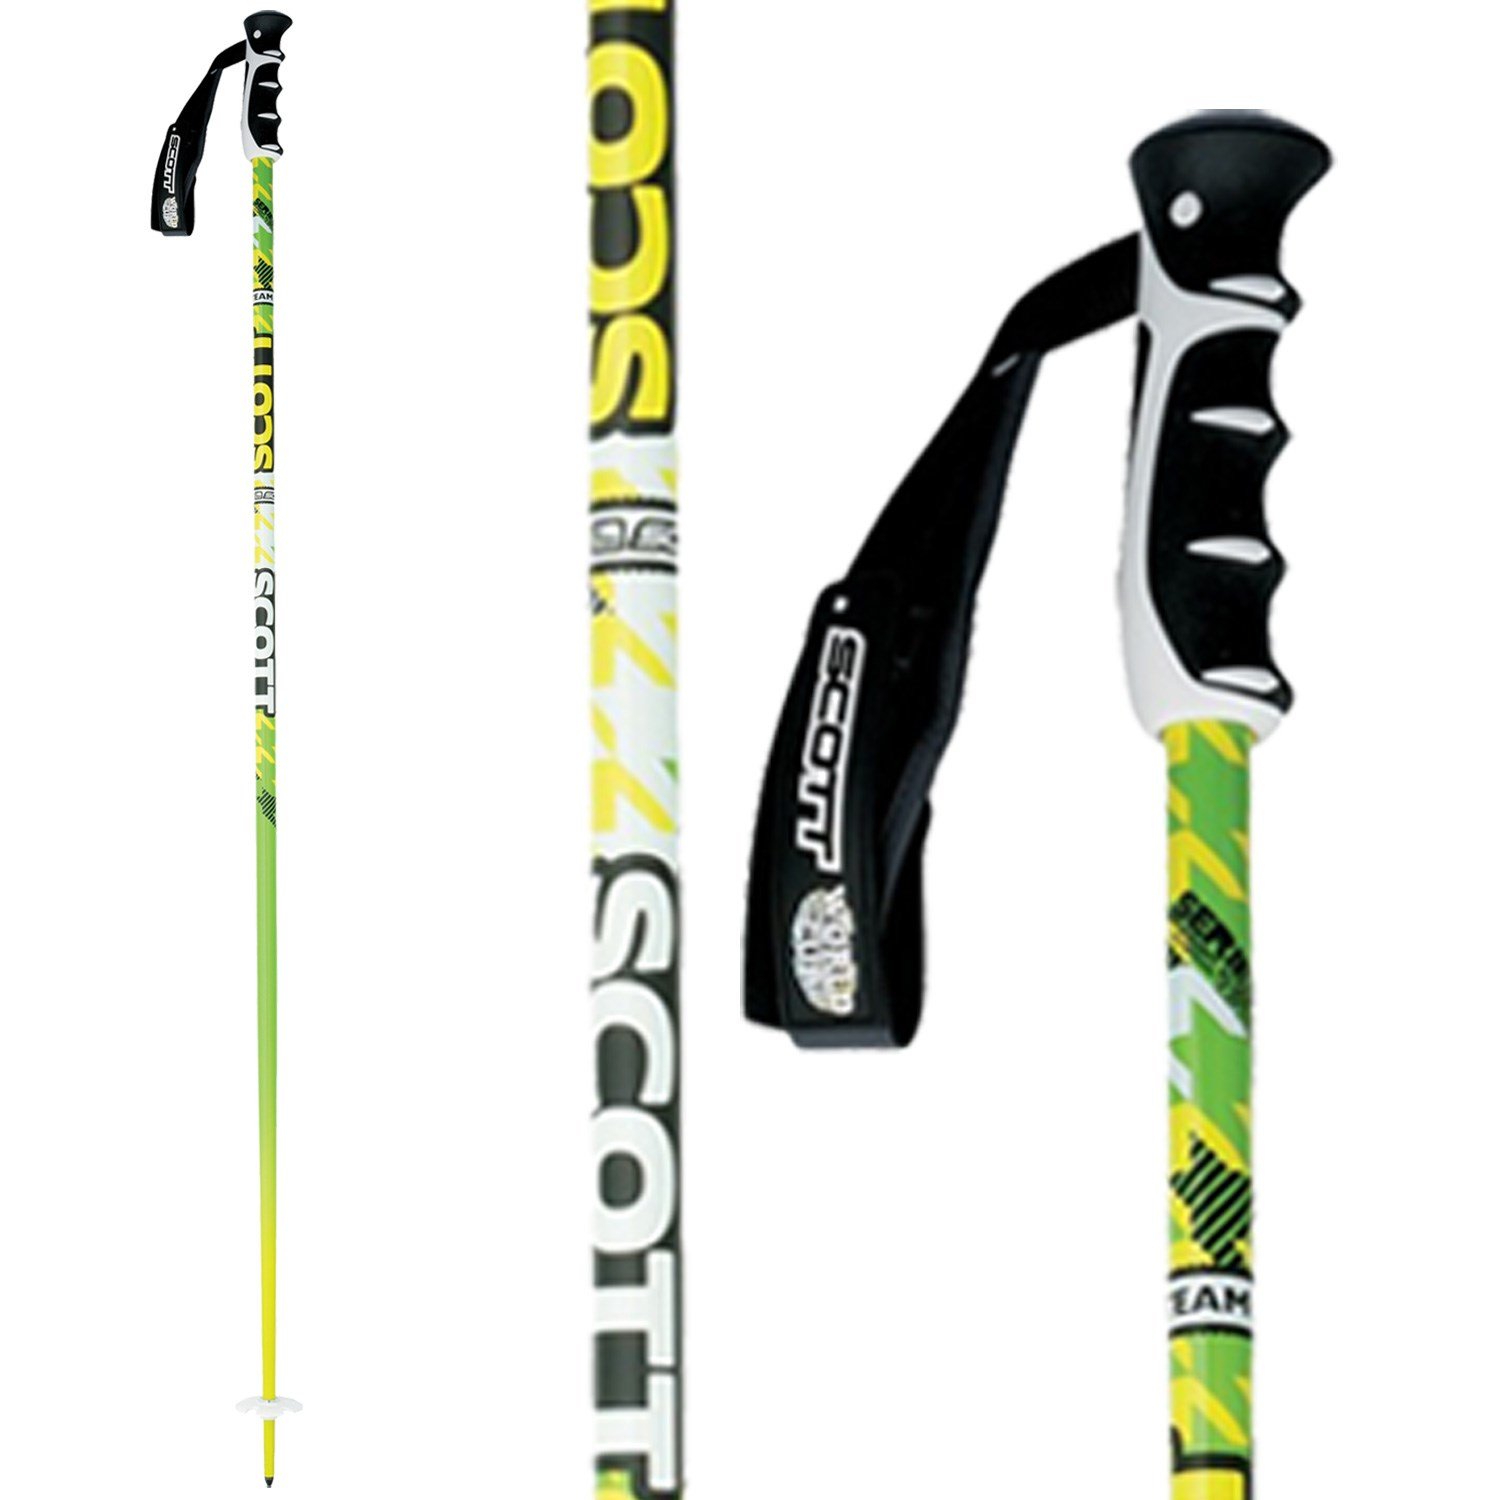 Scott Pole Rental 130 cm 203212 Ski Stöcke Aliminium NEU 